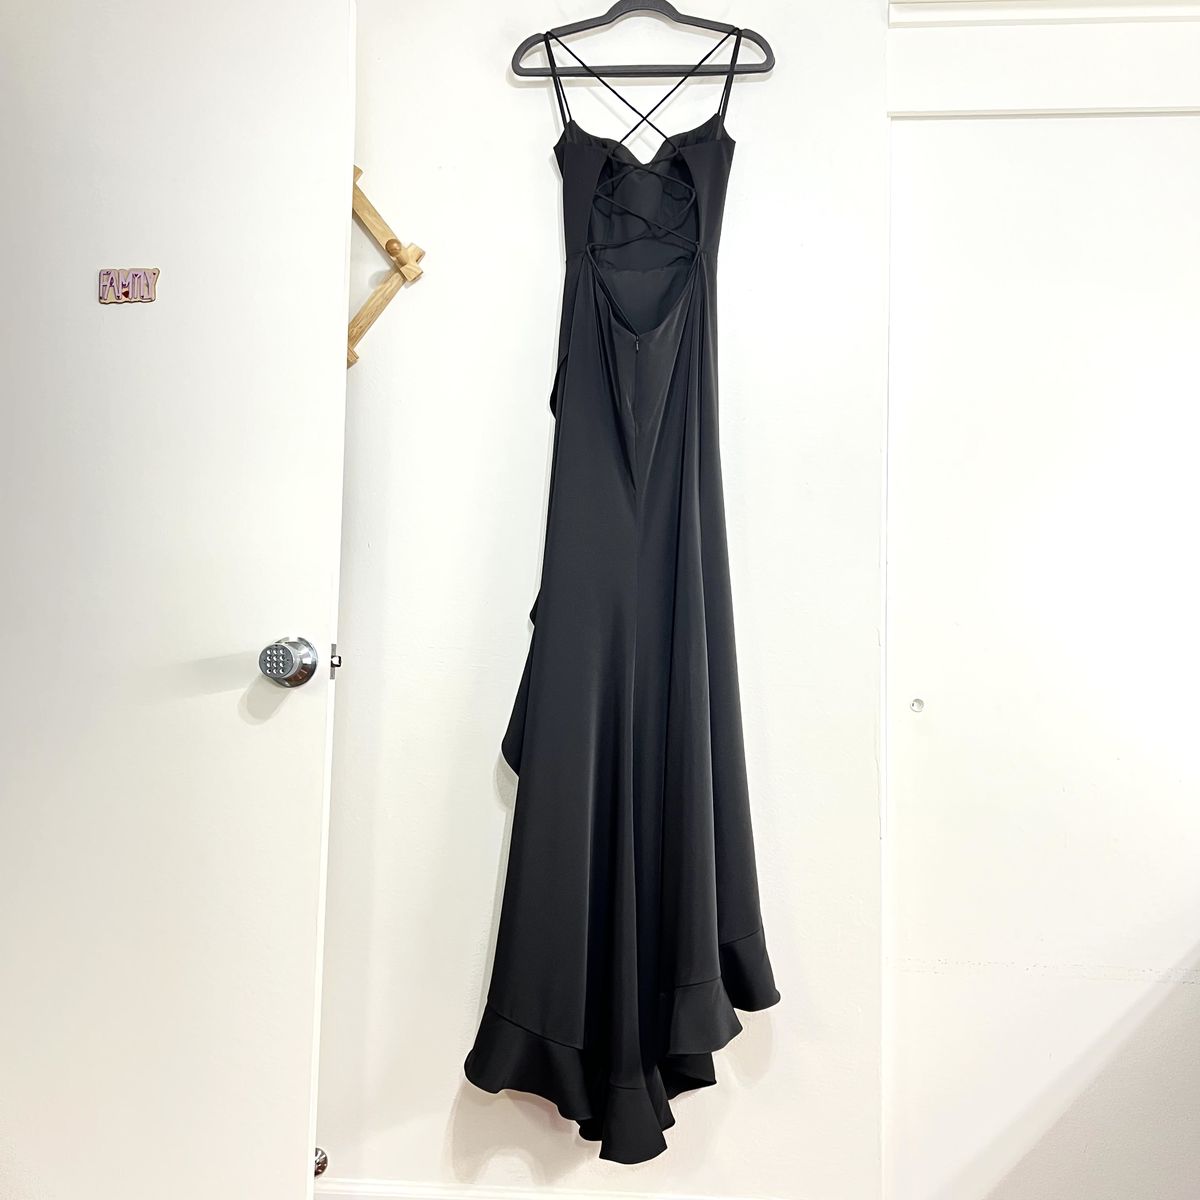 Style 28294 La Femme Size 10 Prom Black Side Slit Dress on Queenly